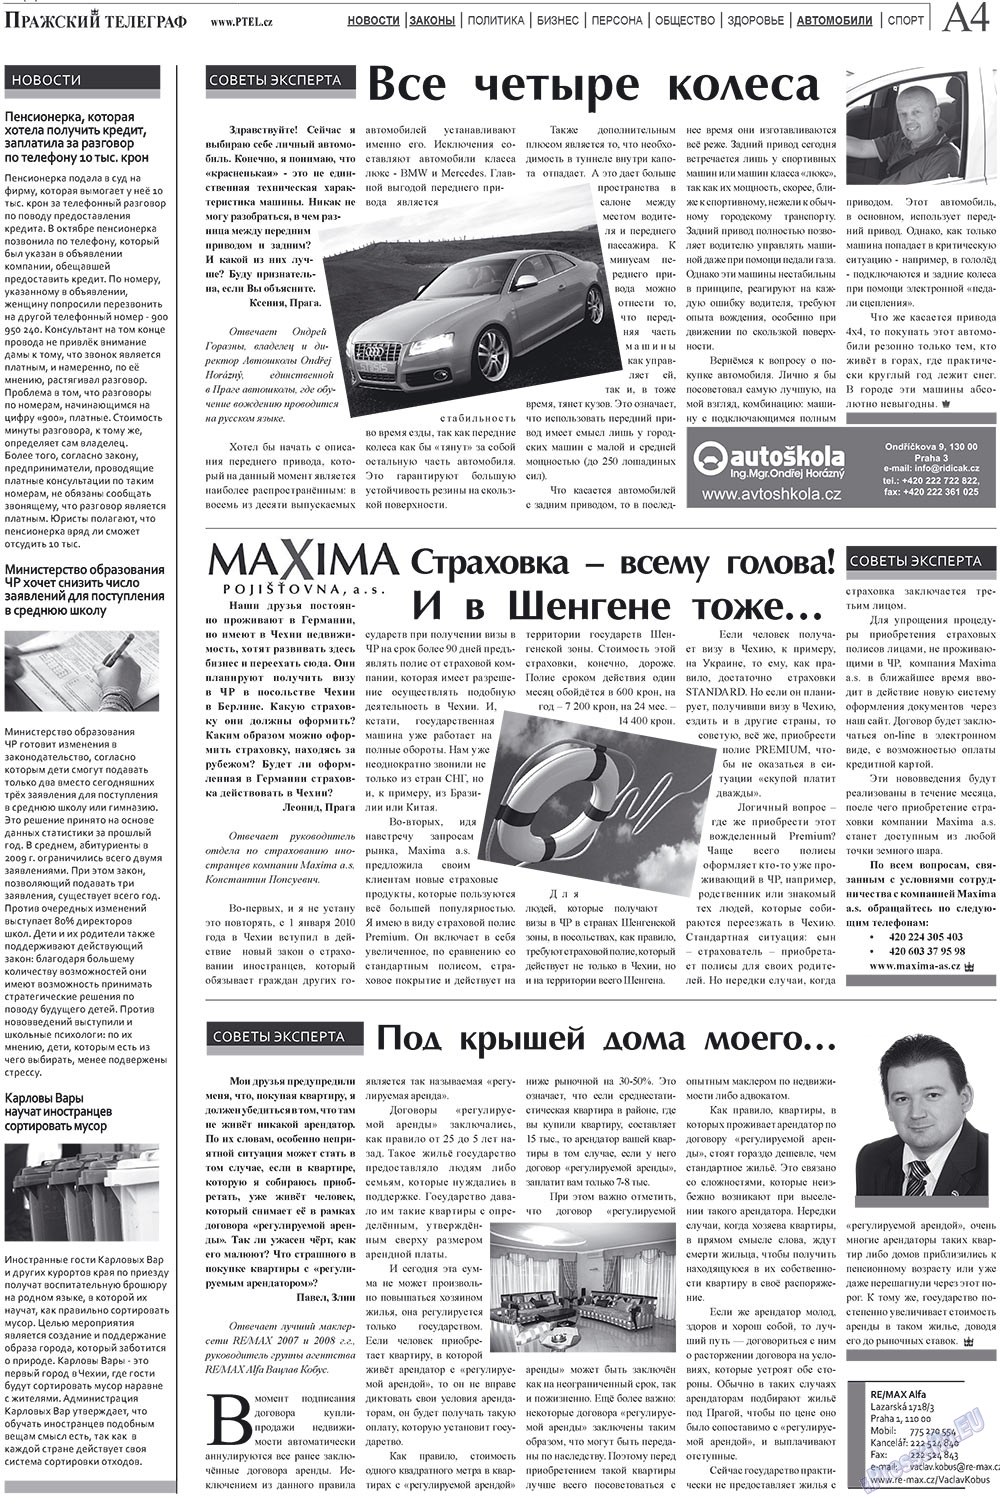 Пражский телеграф, газета. 2010 №4 стр.4